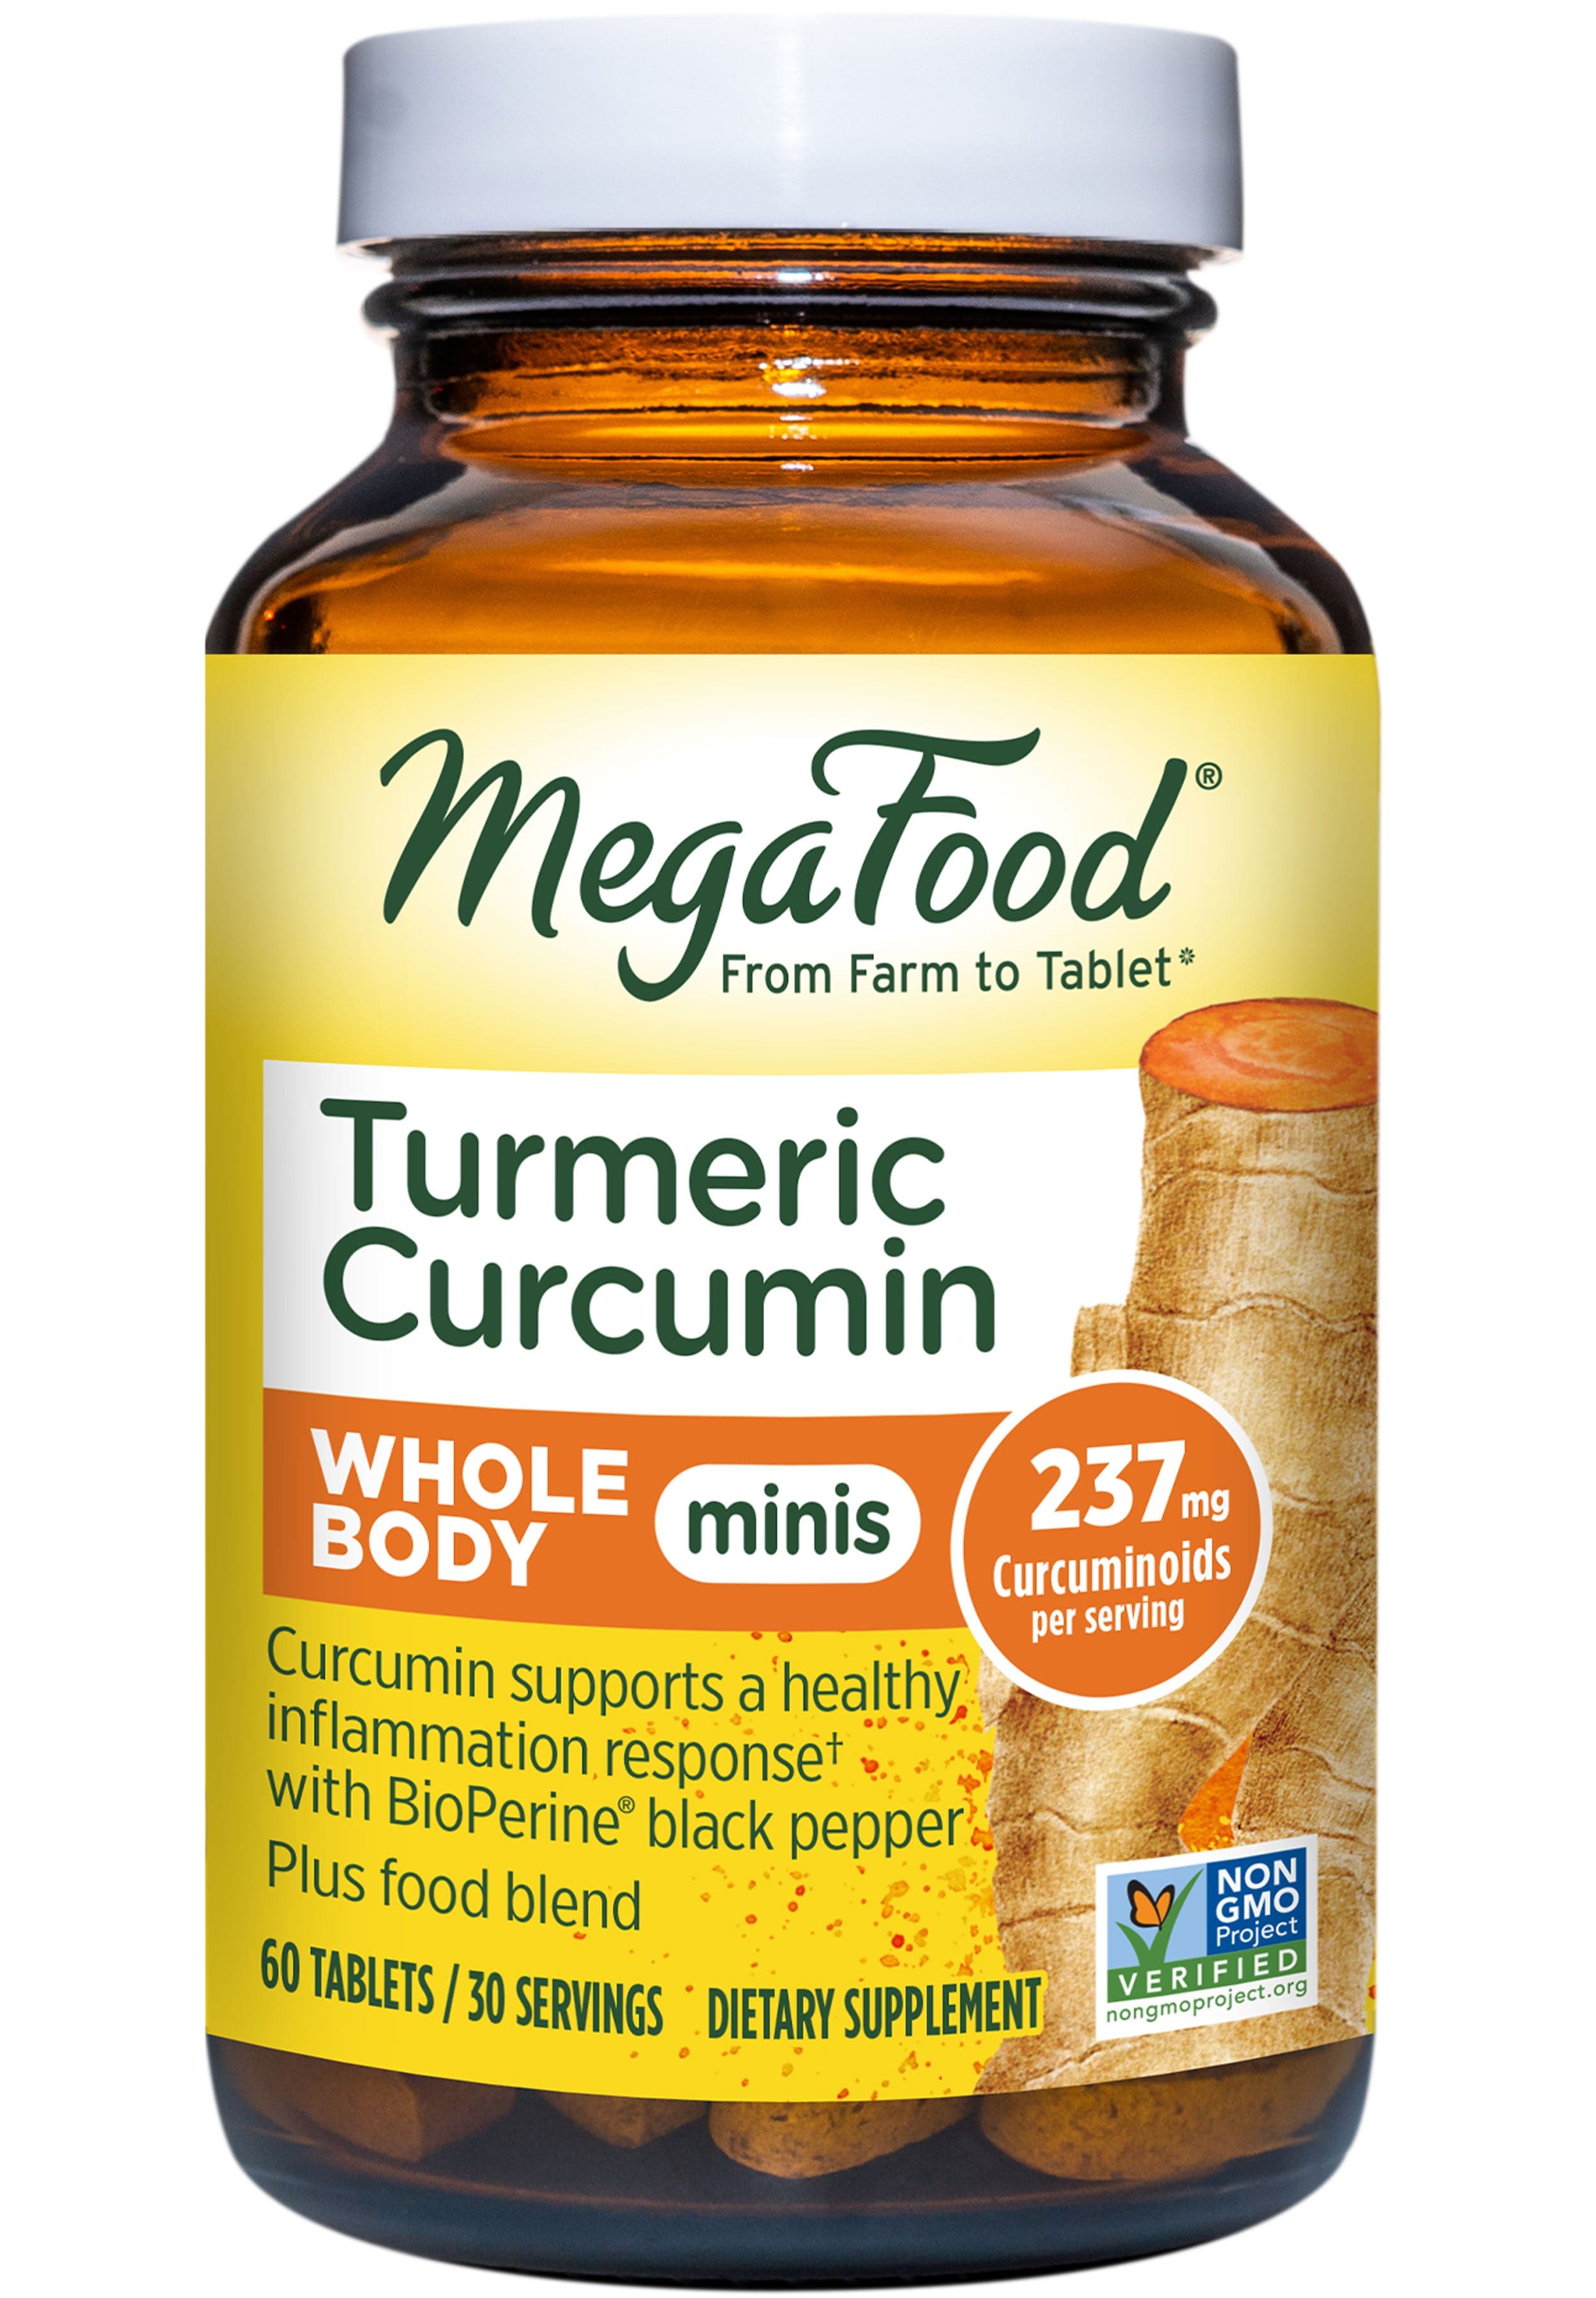 MegaFood Turmeric Curcumin Minis - Whole Body